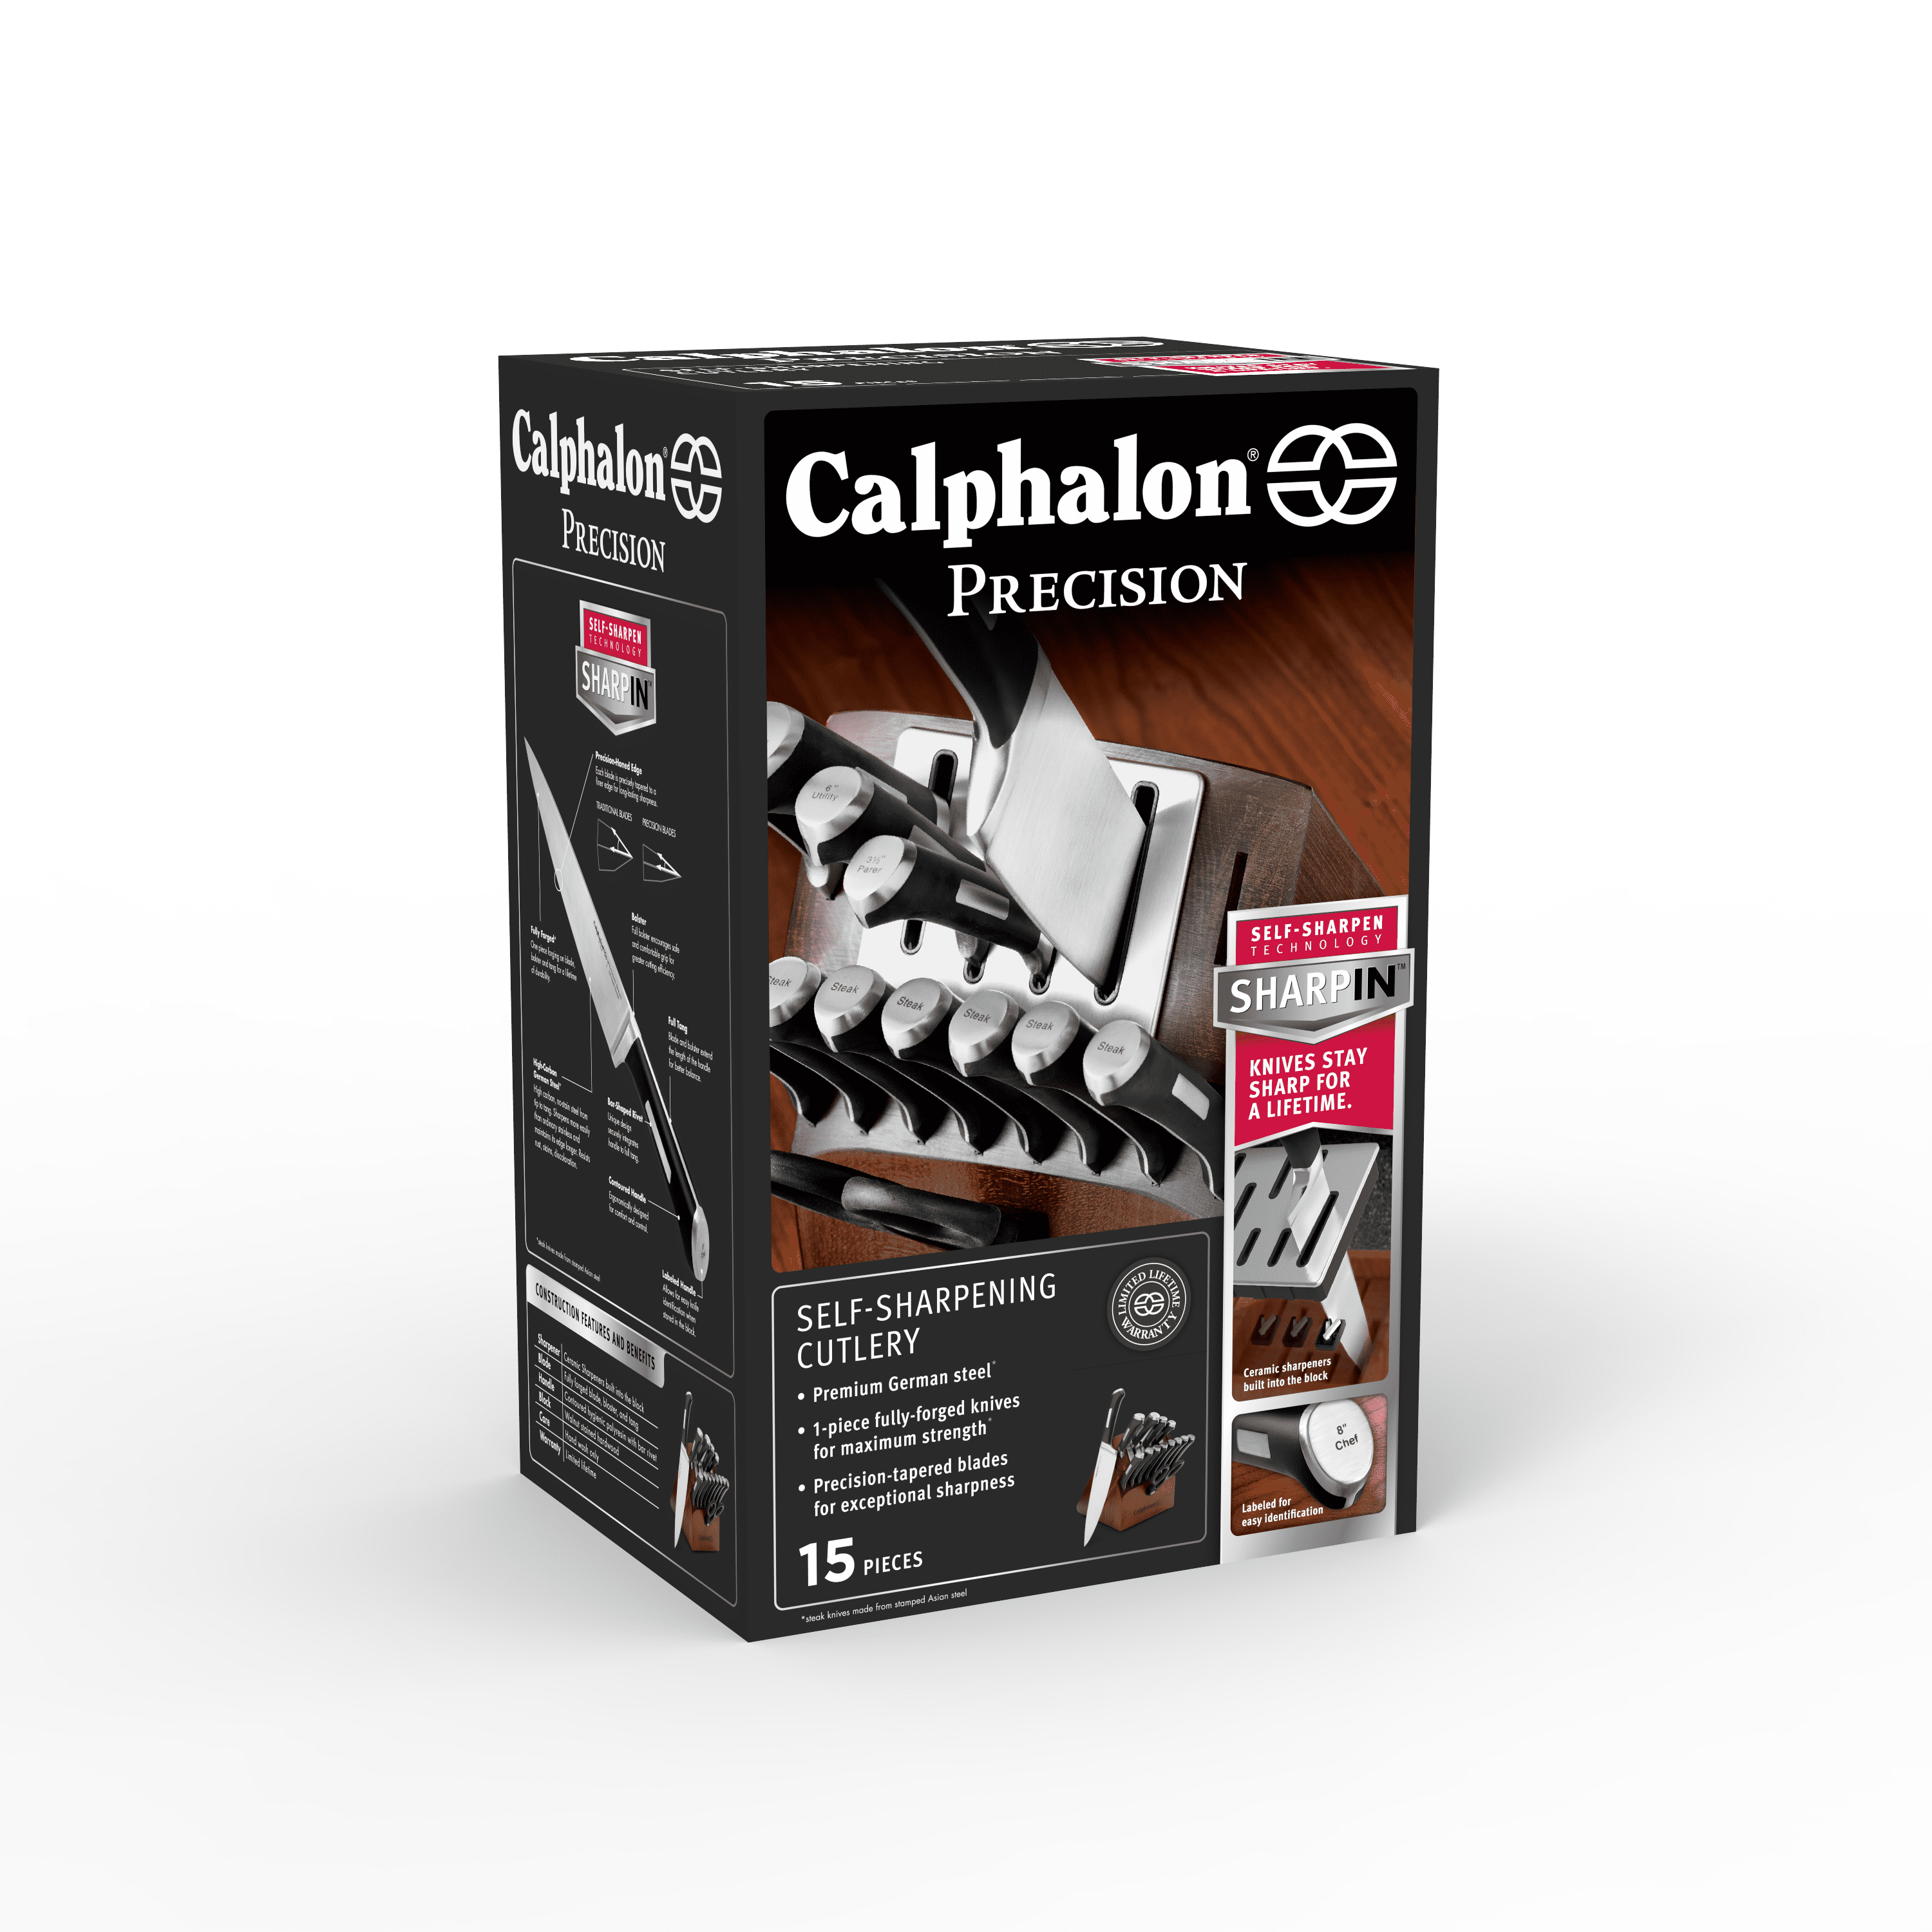 Watch It Work: Calphalon Precision Self-Sharpening Cutlery 